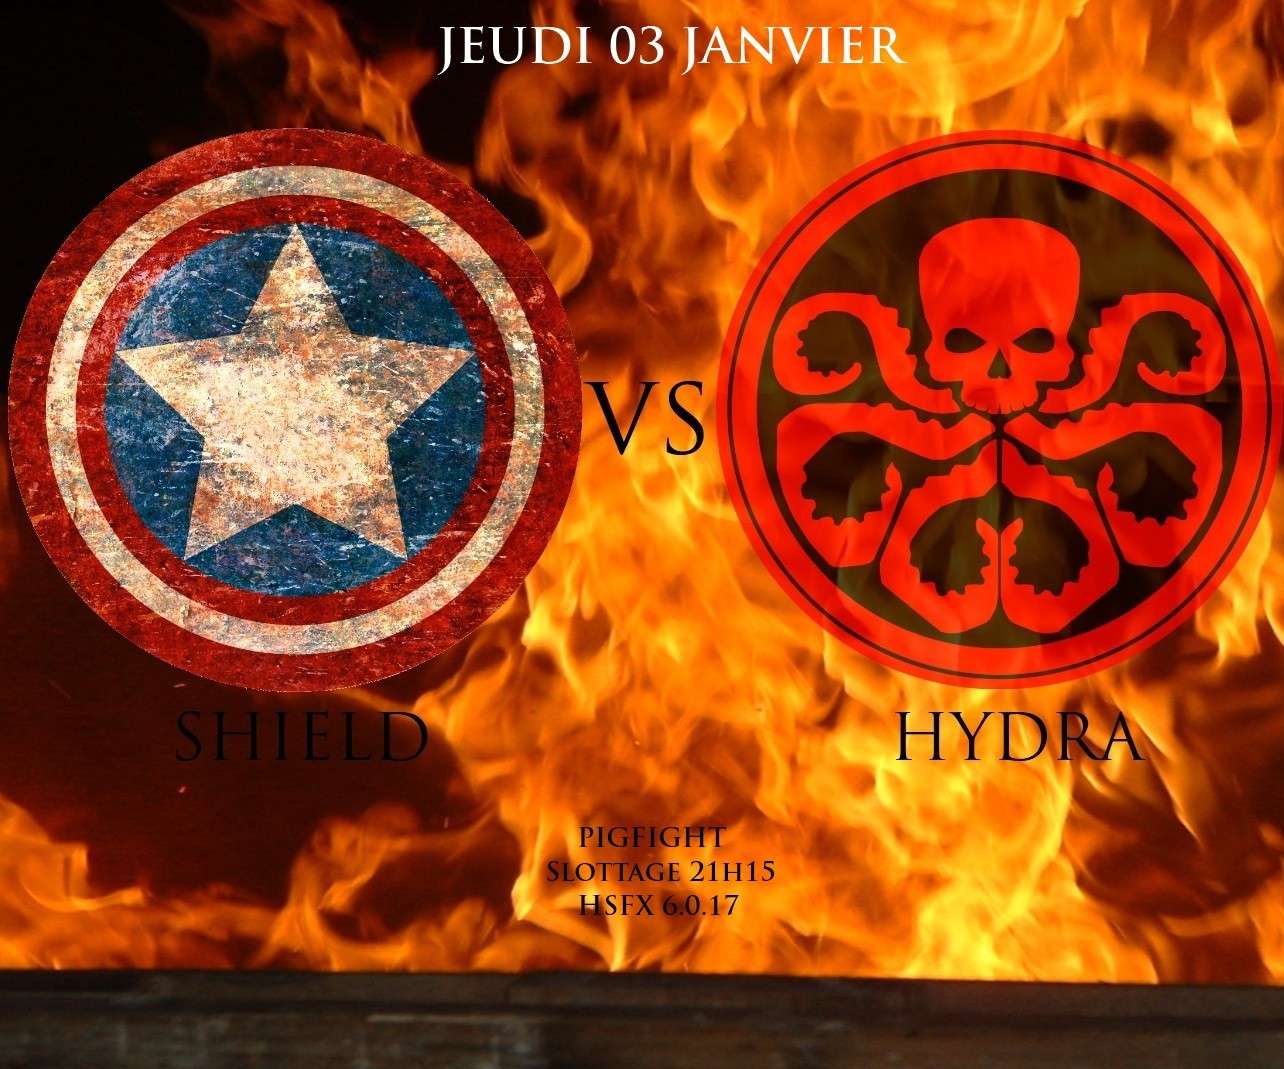 SHIEL VS HYDRA pigfight jeudi 3 janvier   Shield11